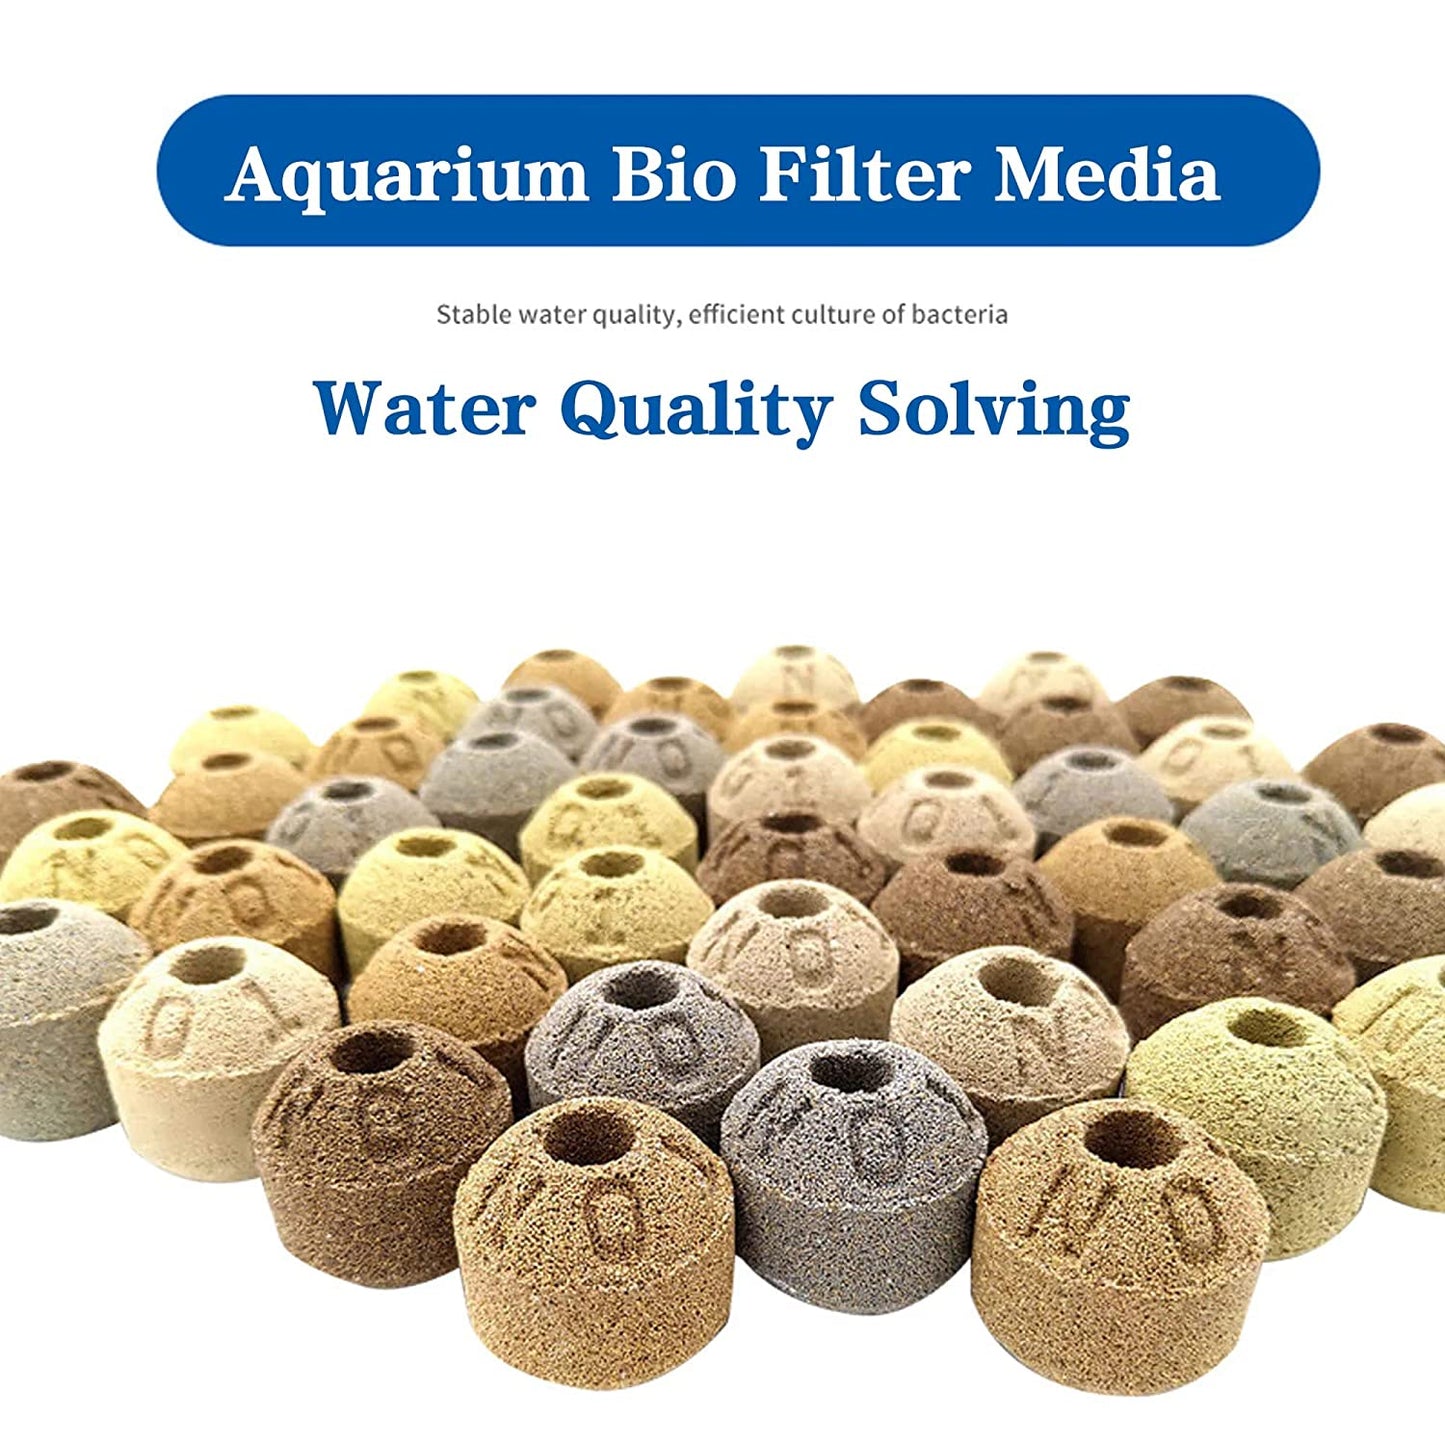 YEE Nano Bacteria Culture Ball Imported Aquarium Filter Media, 600g with Net Bag